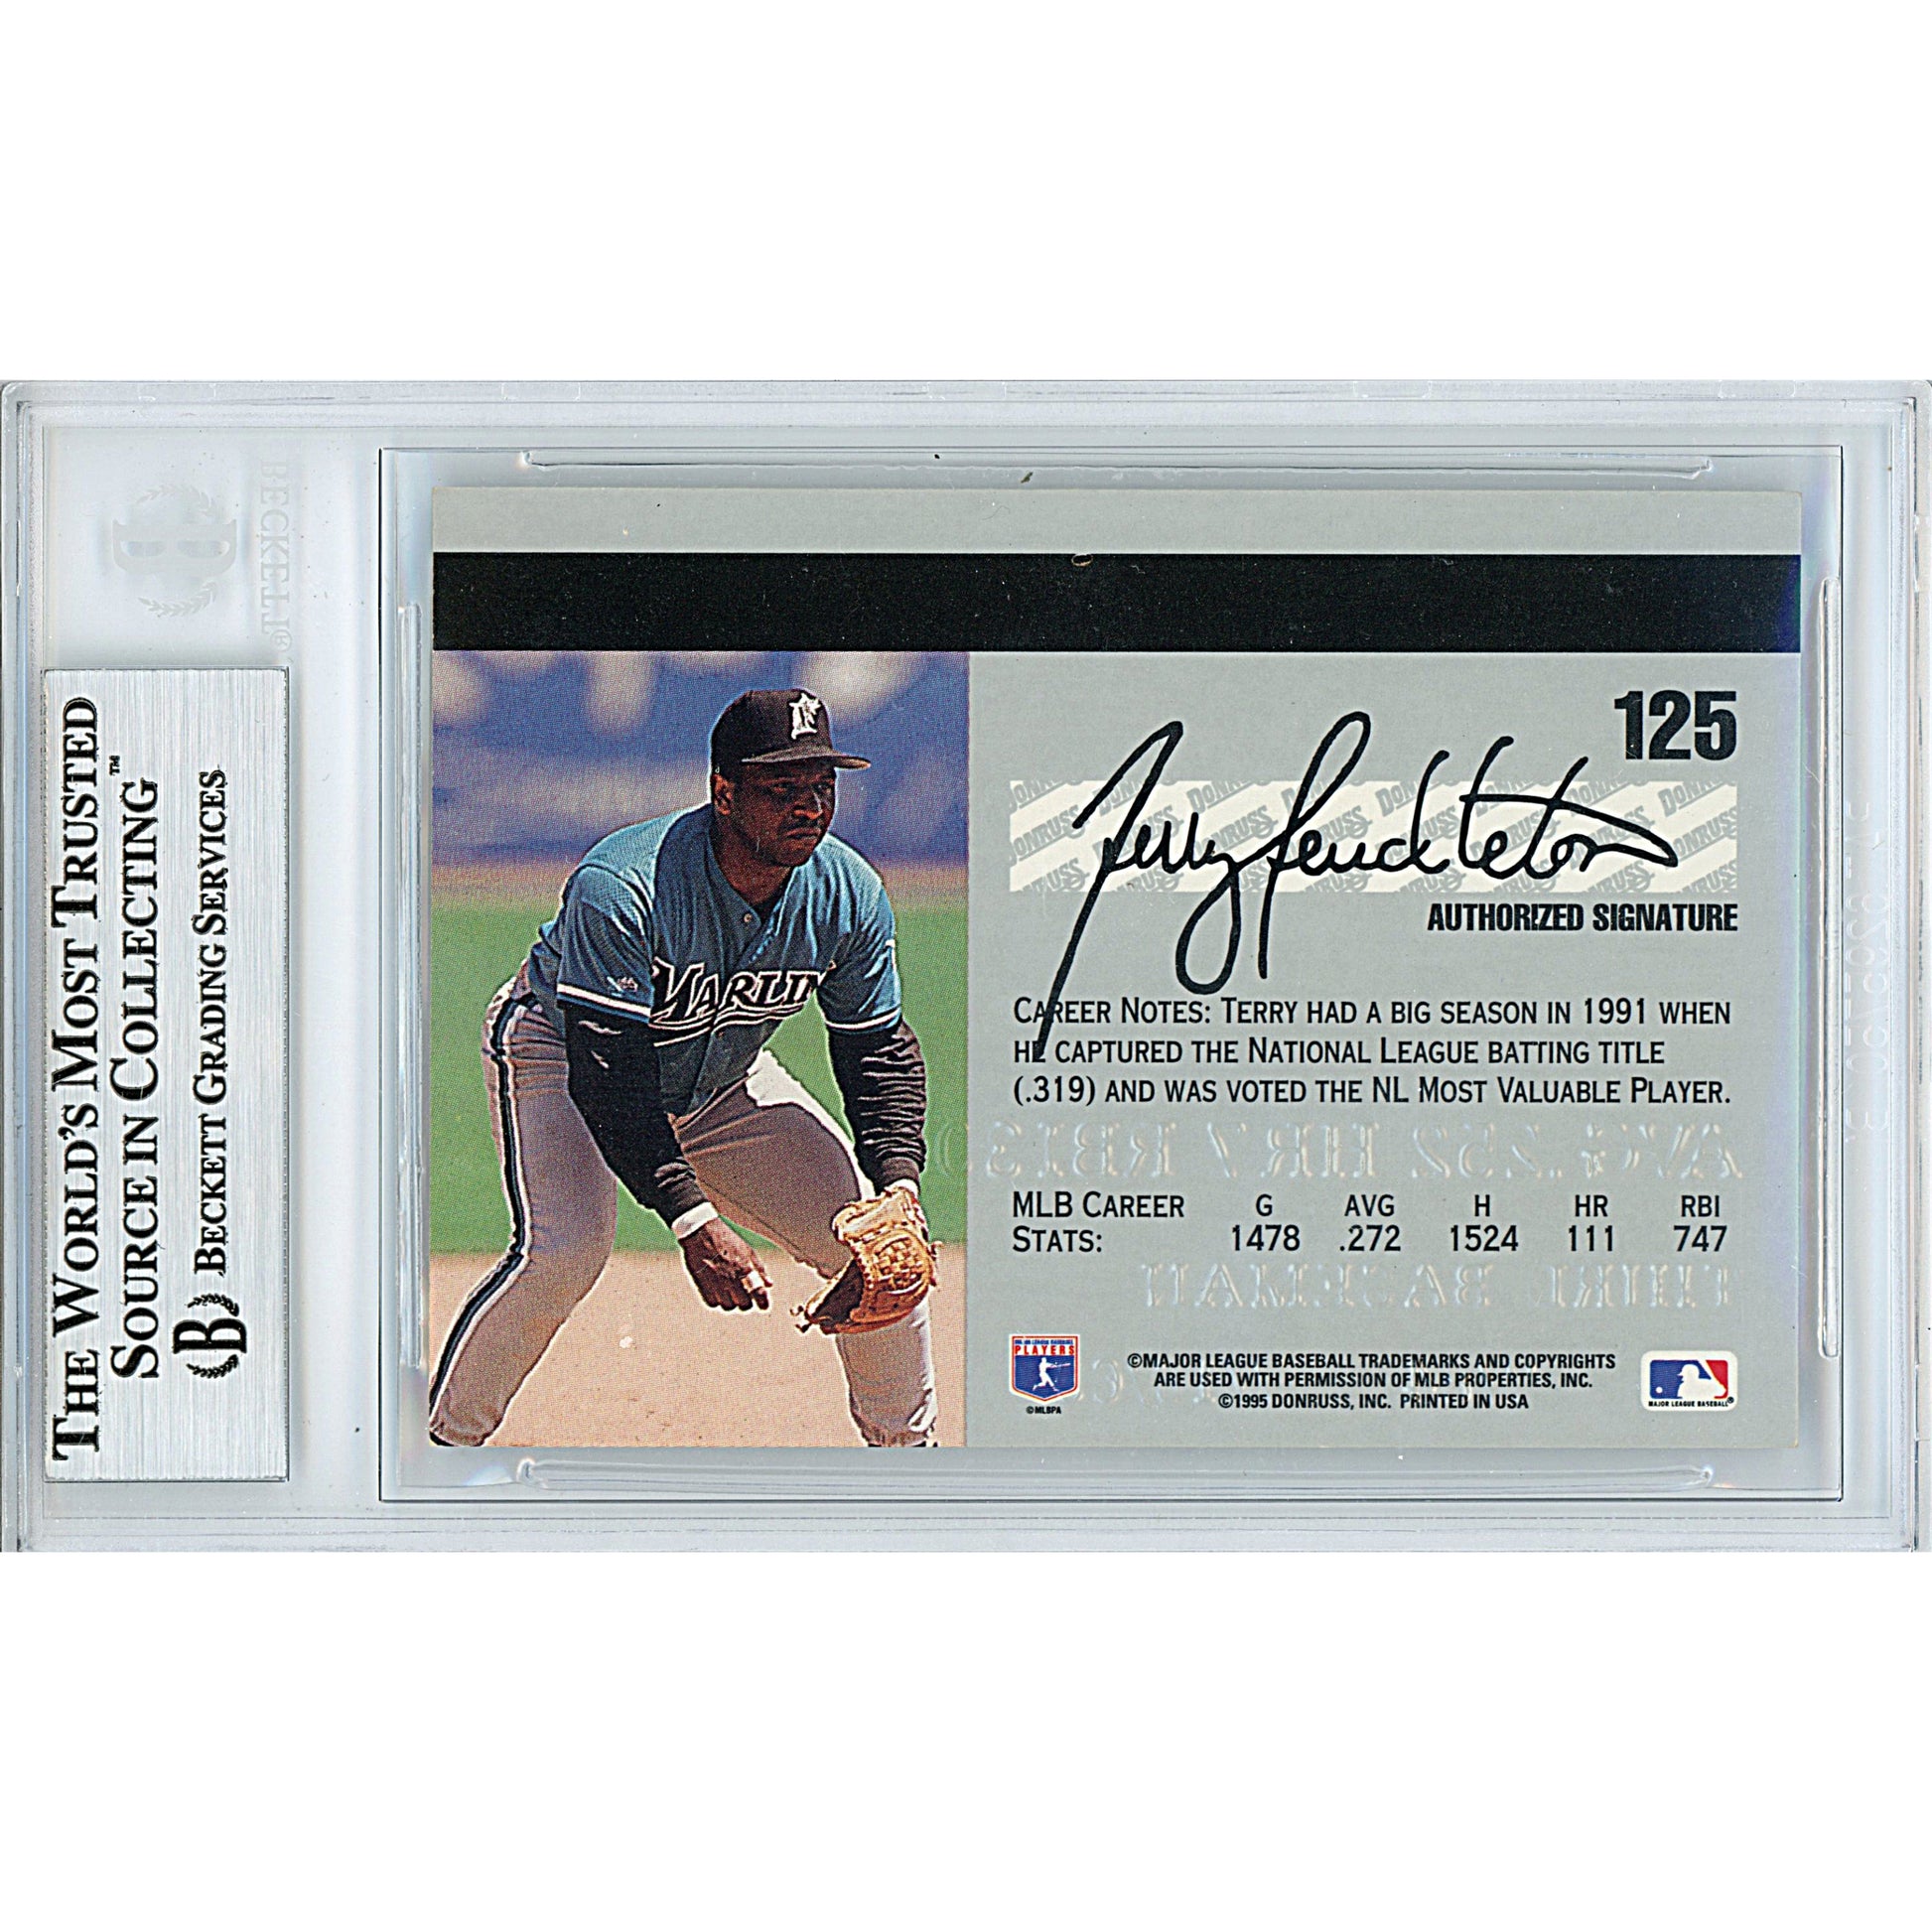 Baseballs- Autographed- Terry Pendleton Signed Florida Marlins 1995 Studio Baseball Card Beckett BAS Slabbed 00013191078 - 103